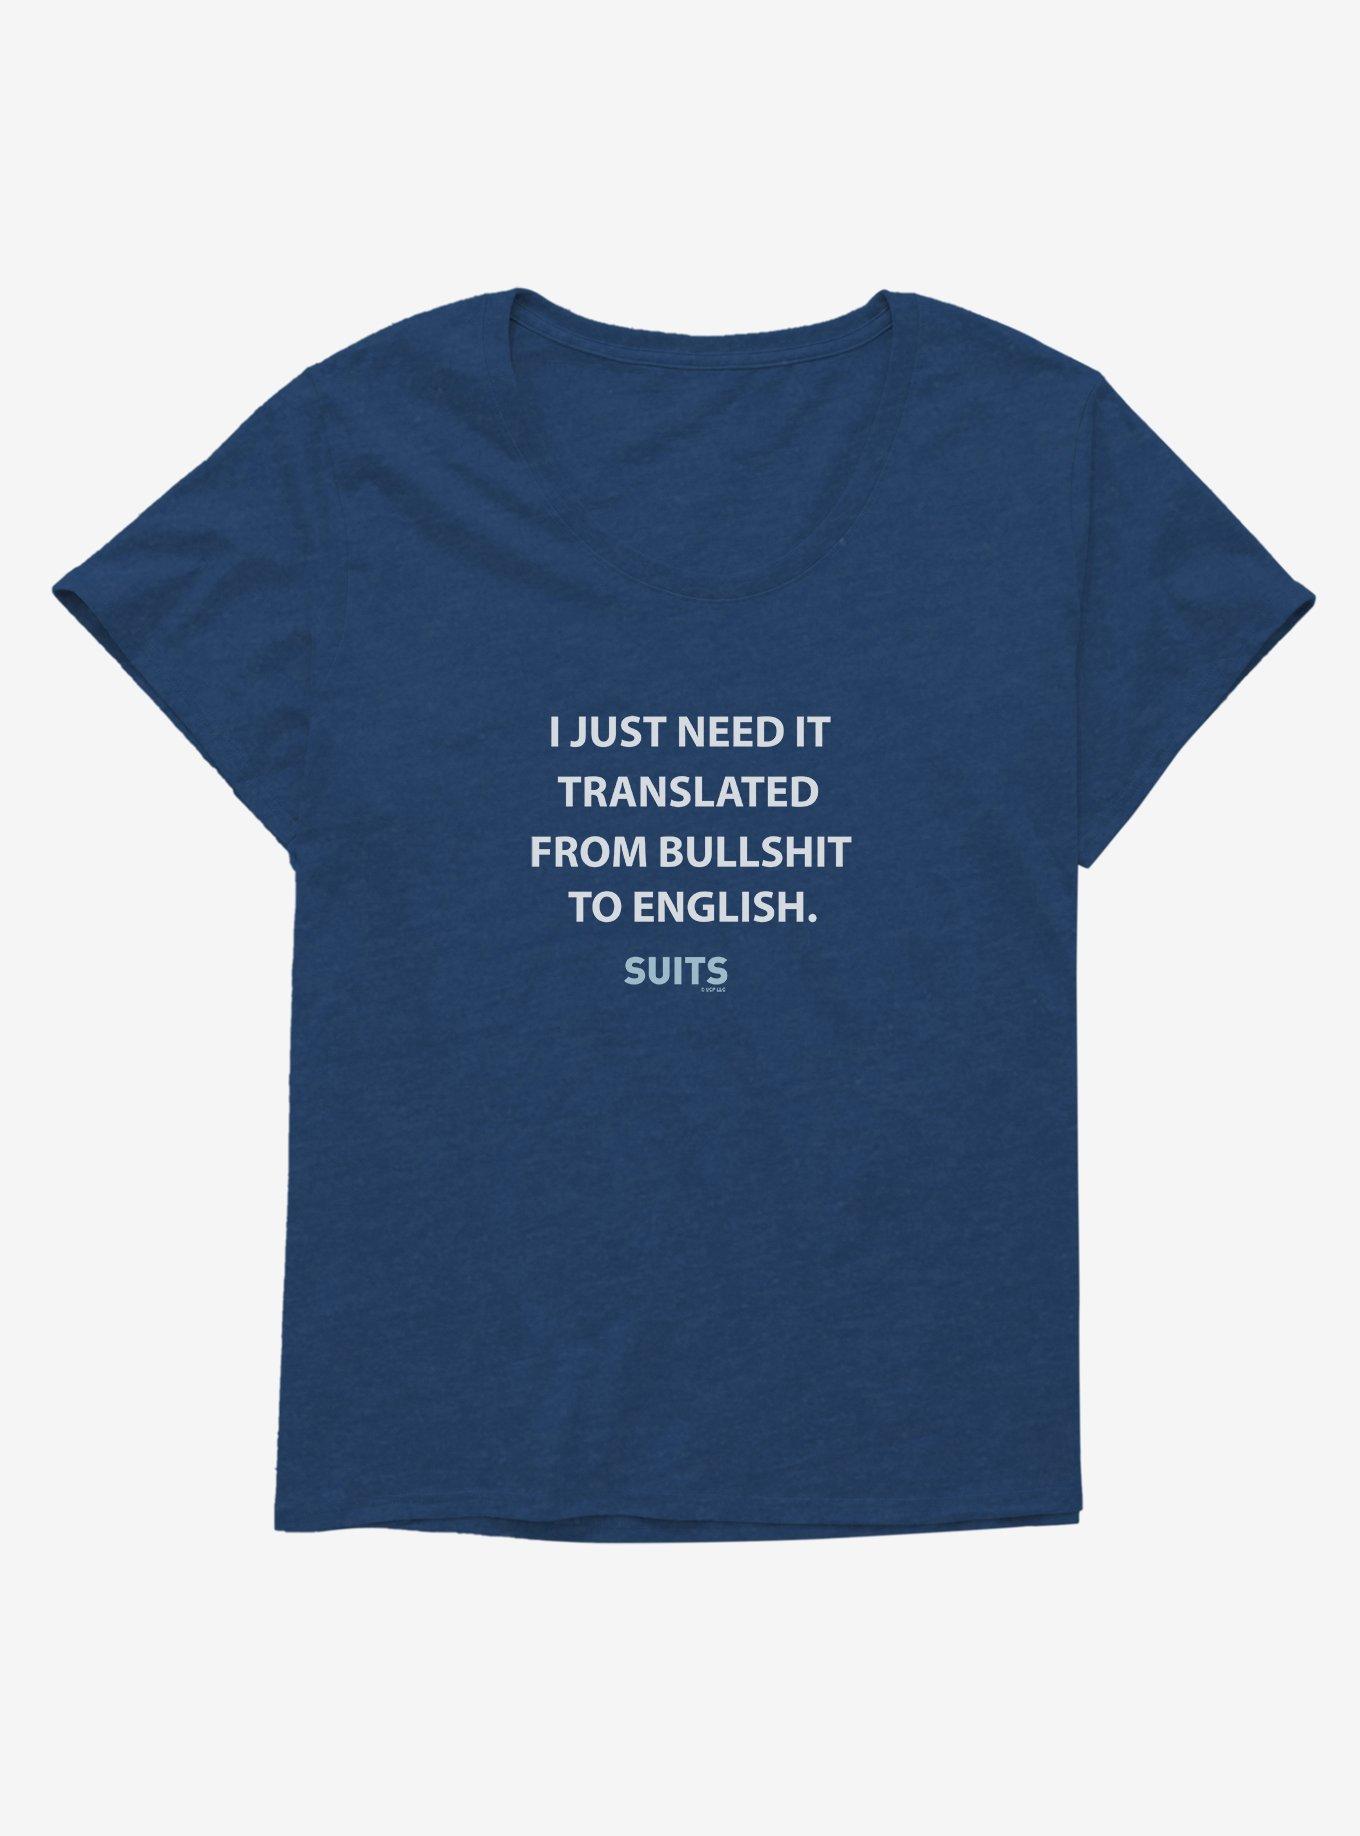 Suits Translate Girls T-Shirt Plus